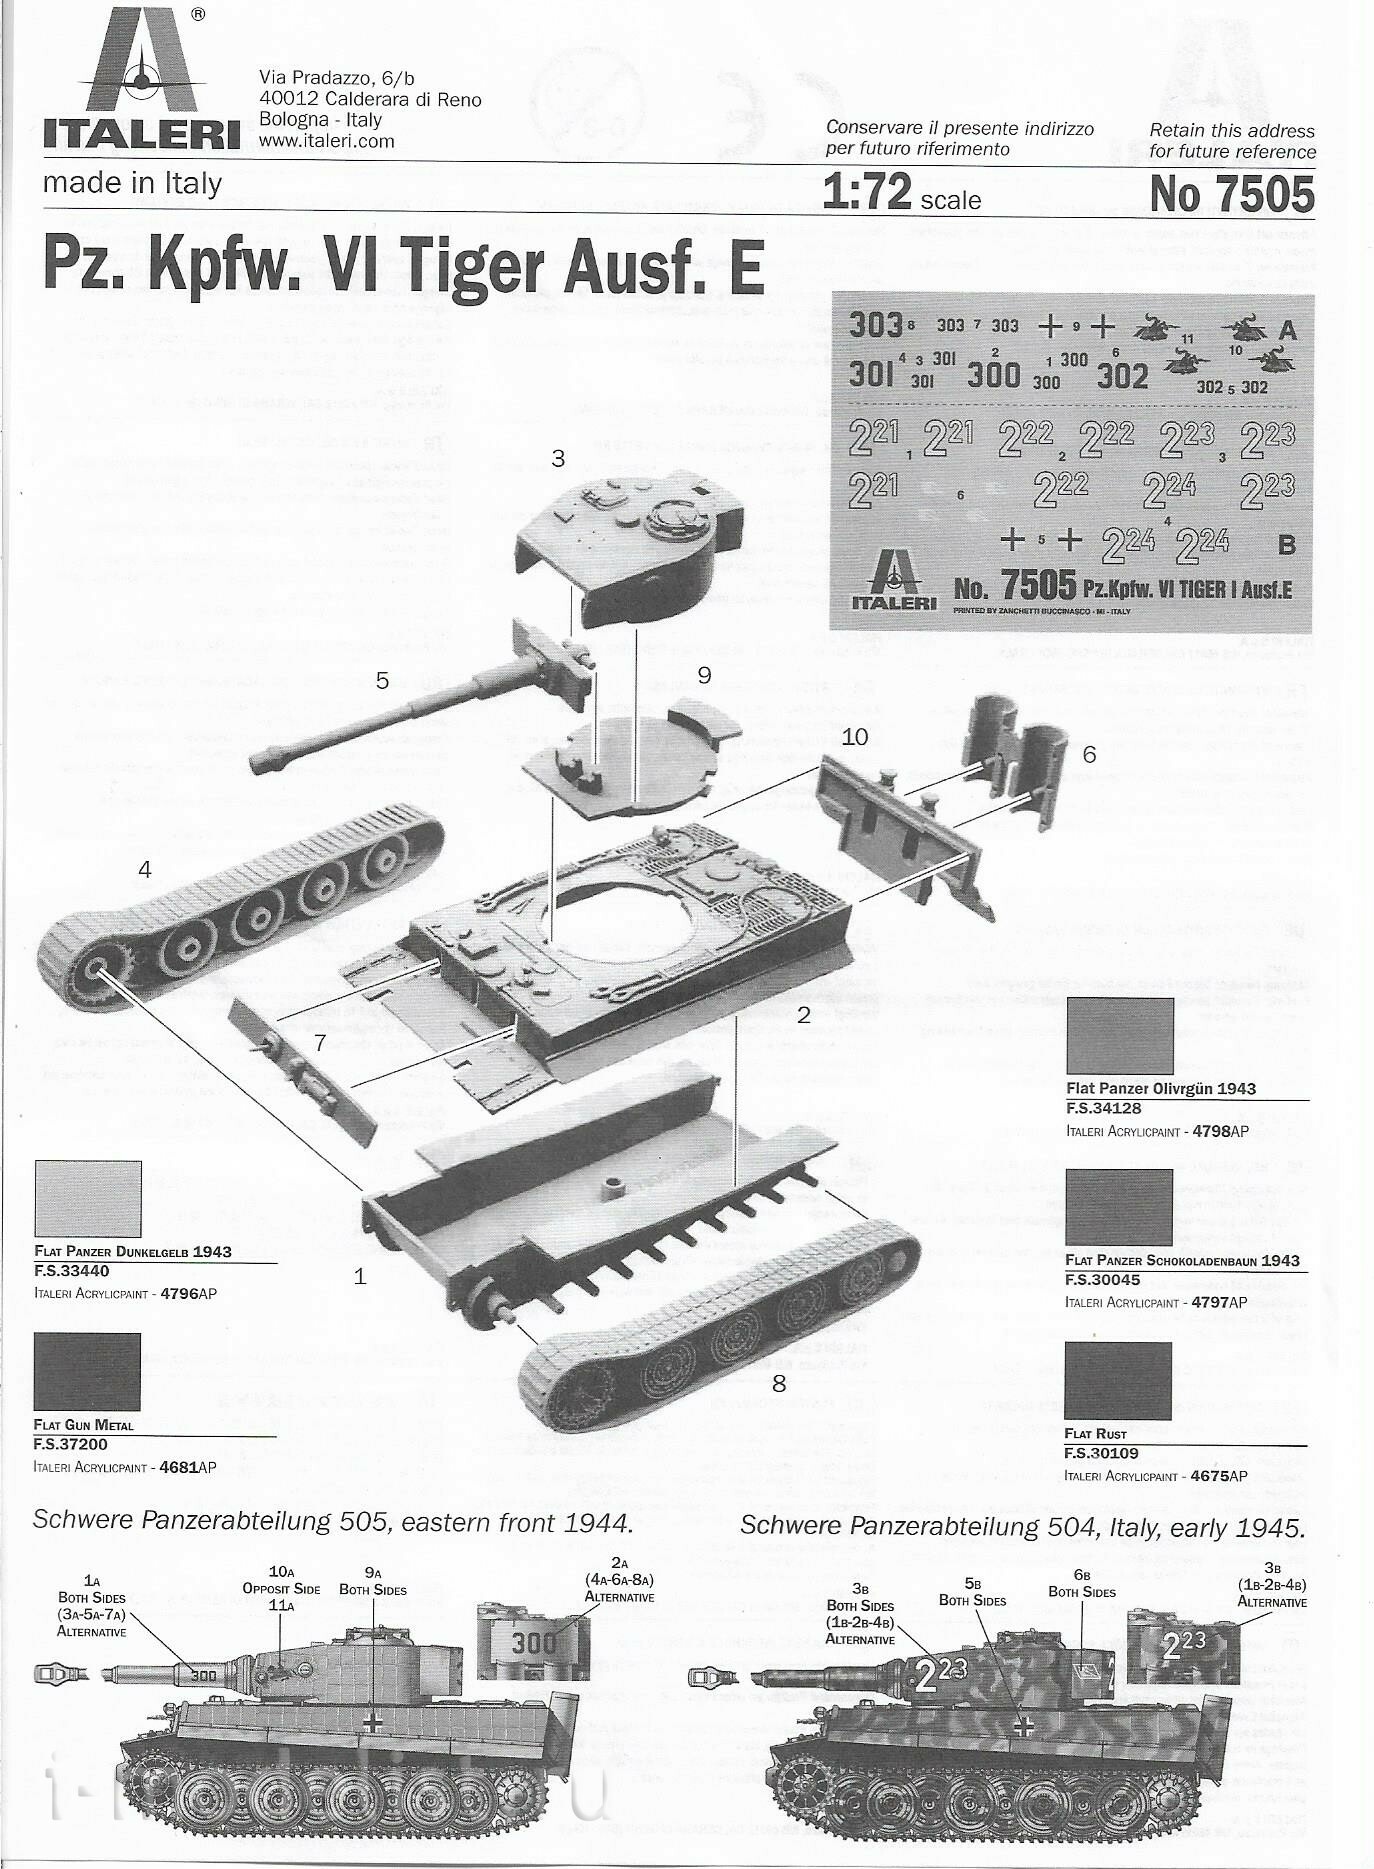 7505 Italeri 1/72 Танк Pz.Kfpw. VI Tiger Ausf. E (две модели в комплекте)